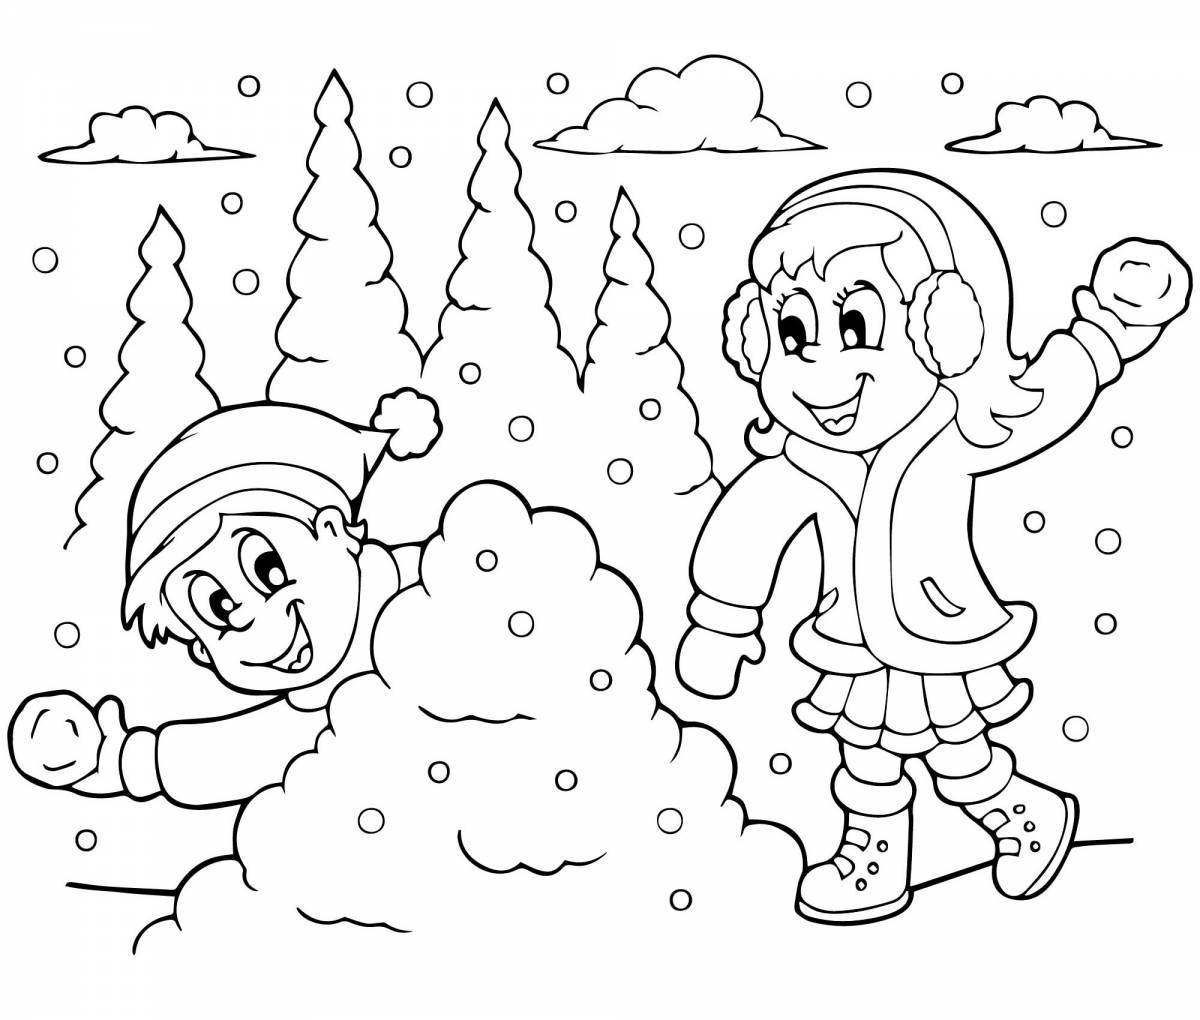 Fancy winter games coloring book